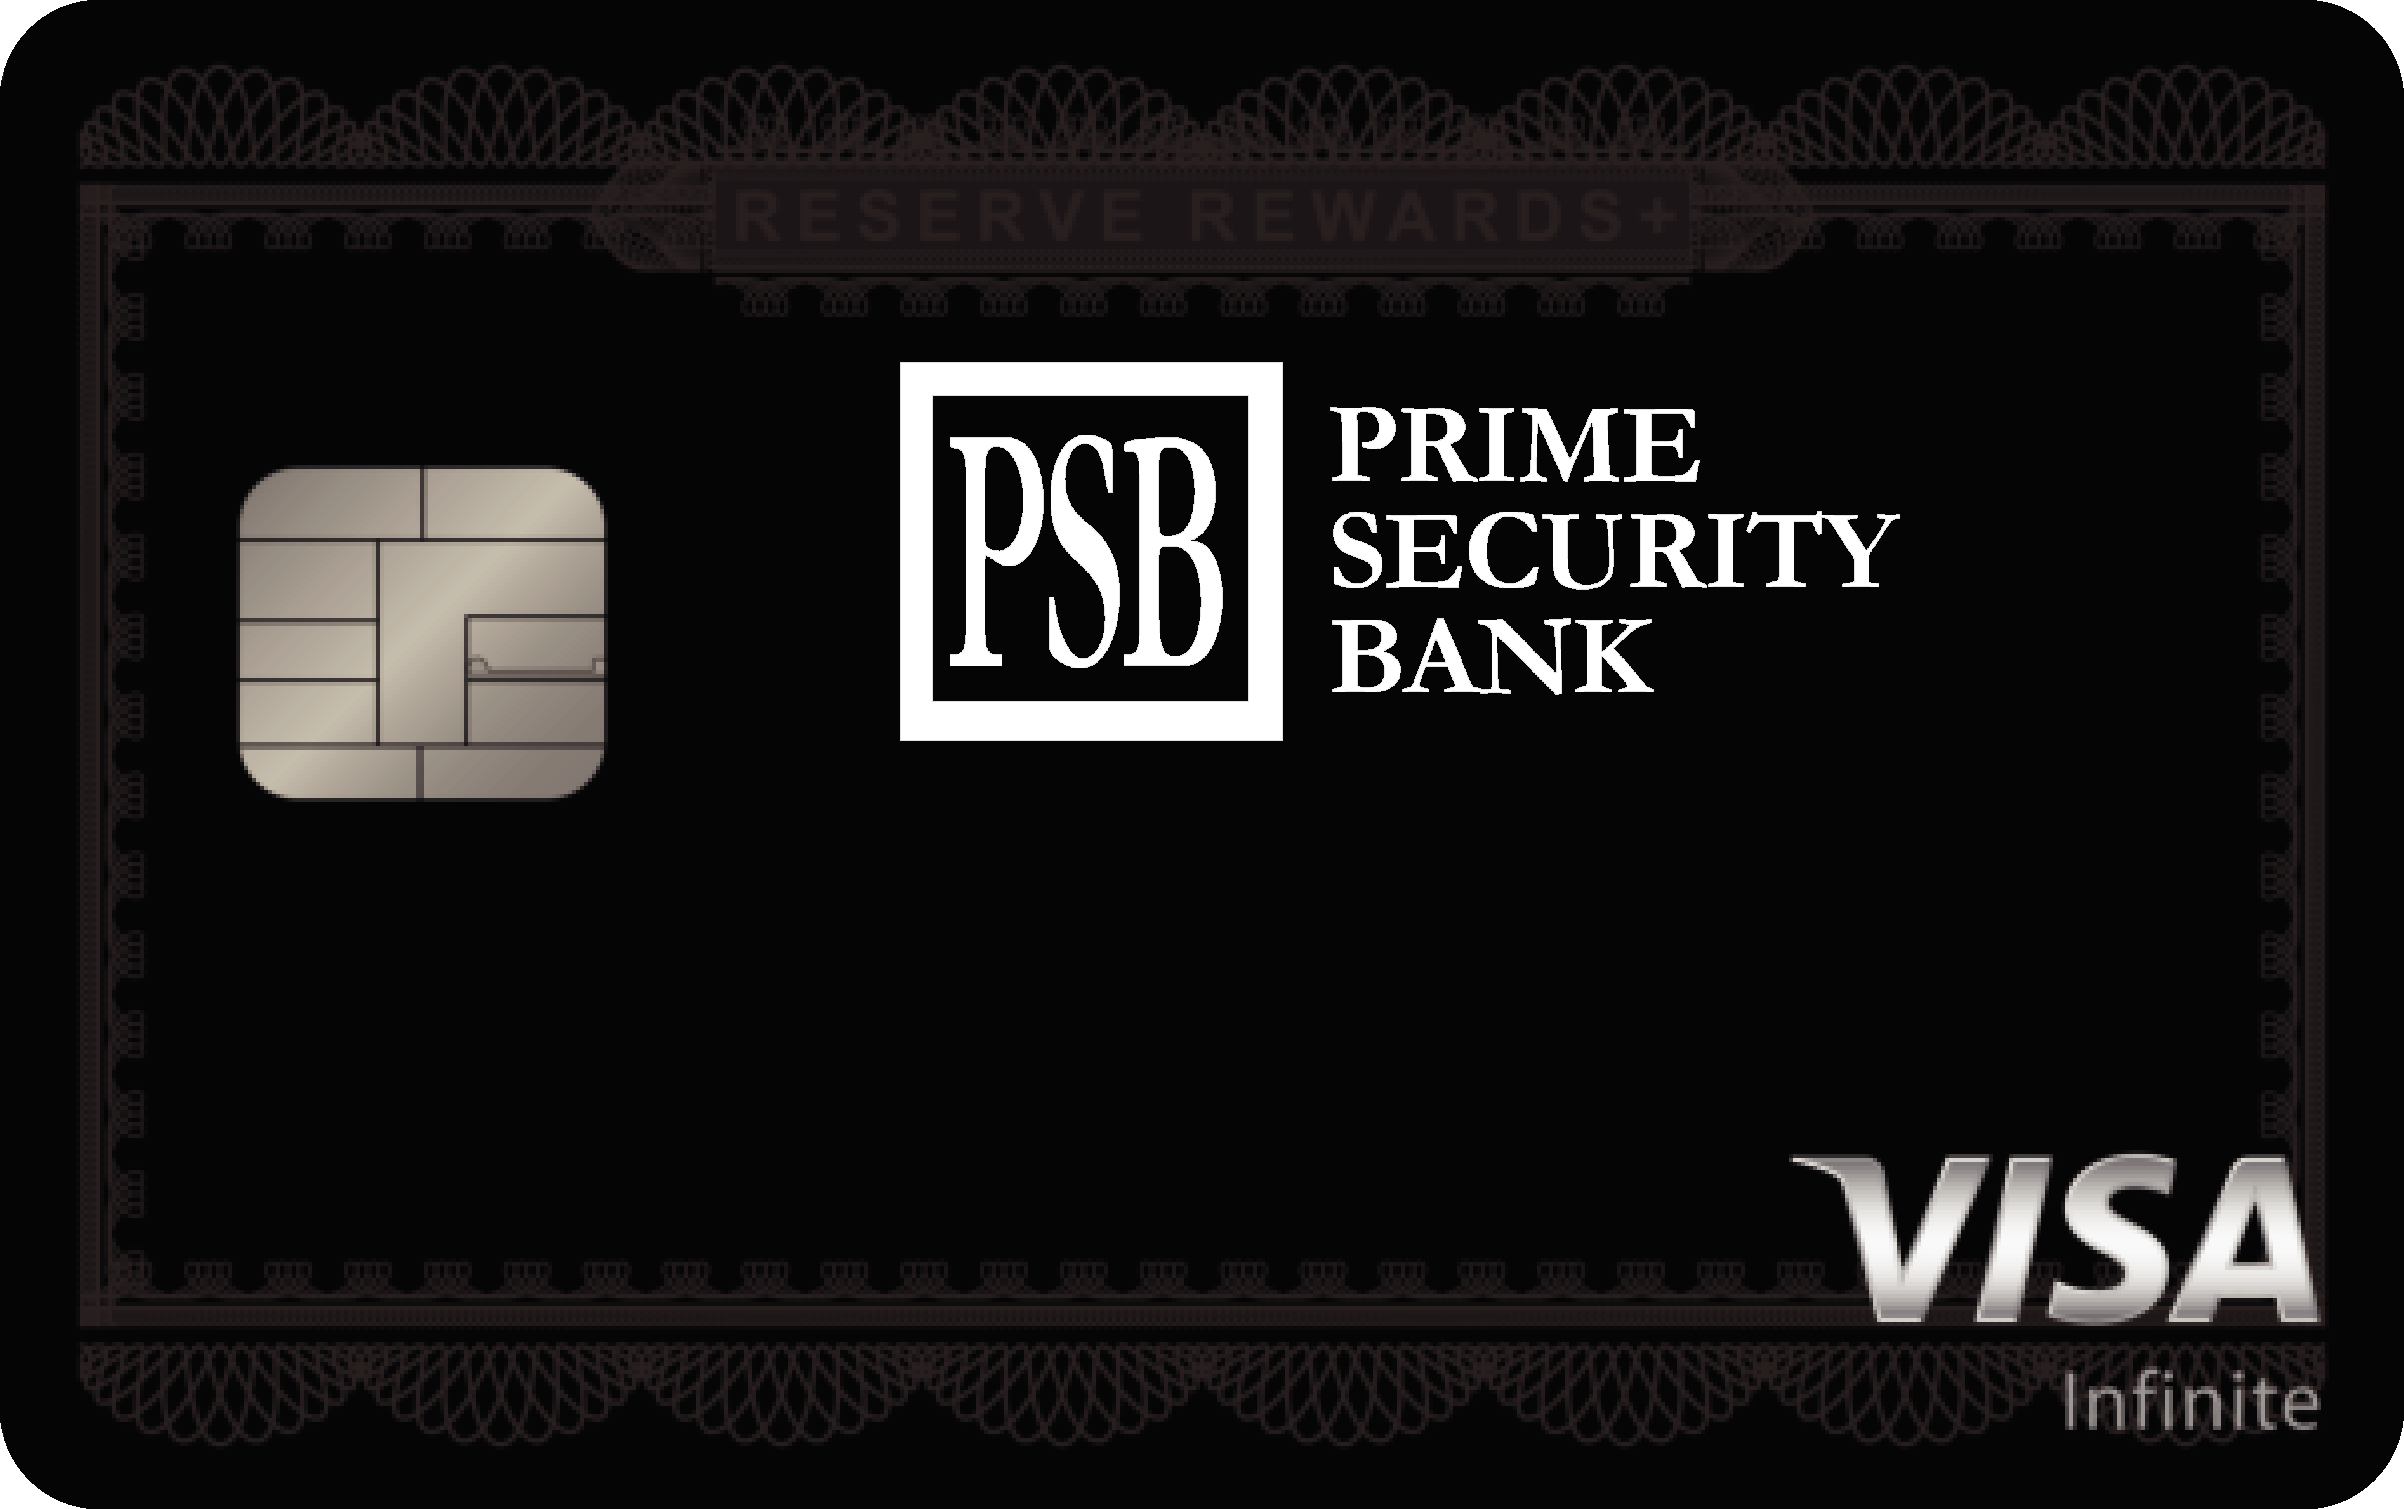 PRIME SECURITY BANK Reserve Rewards+ Card